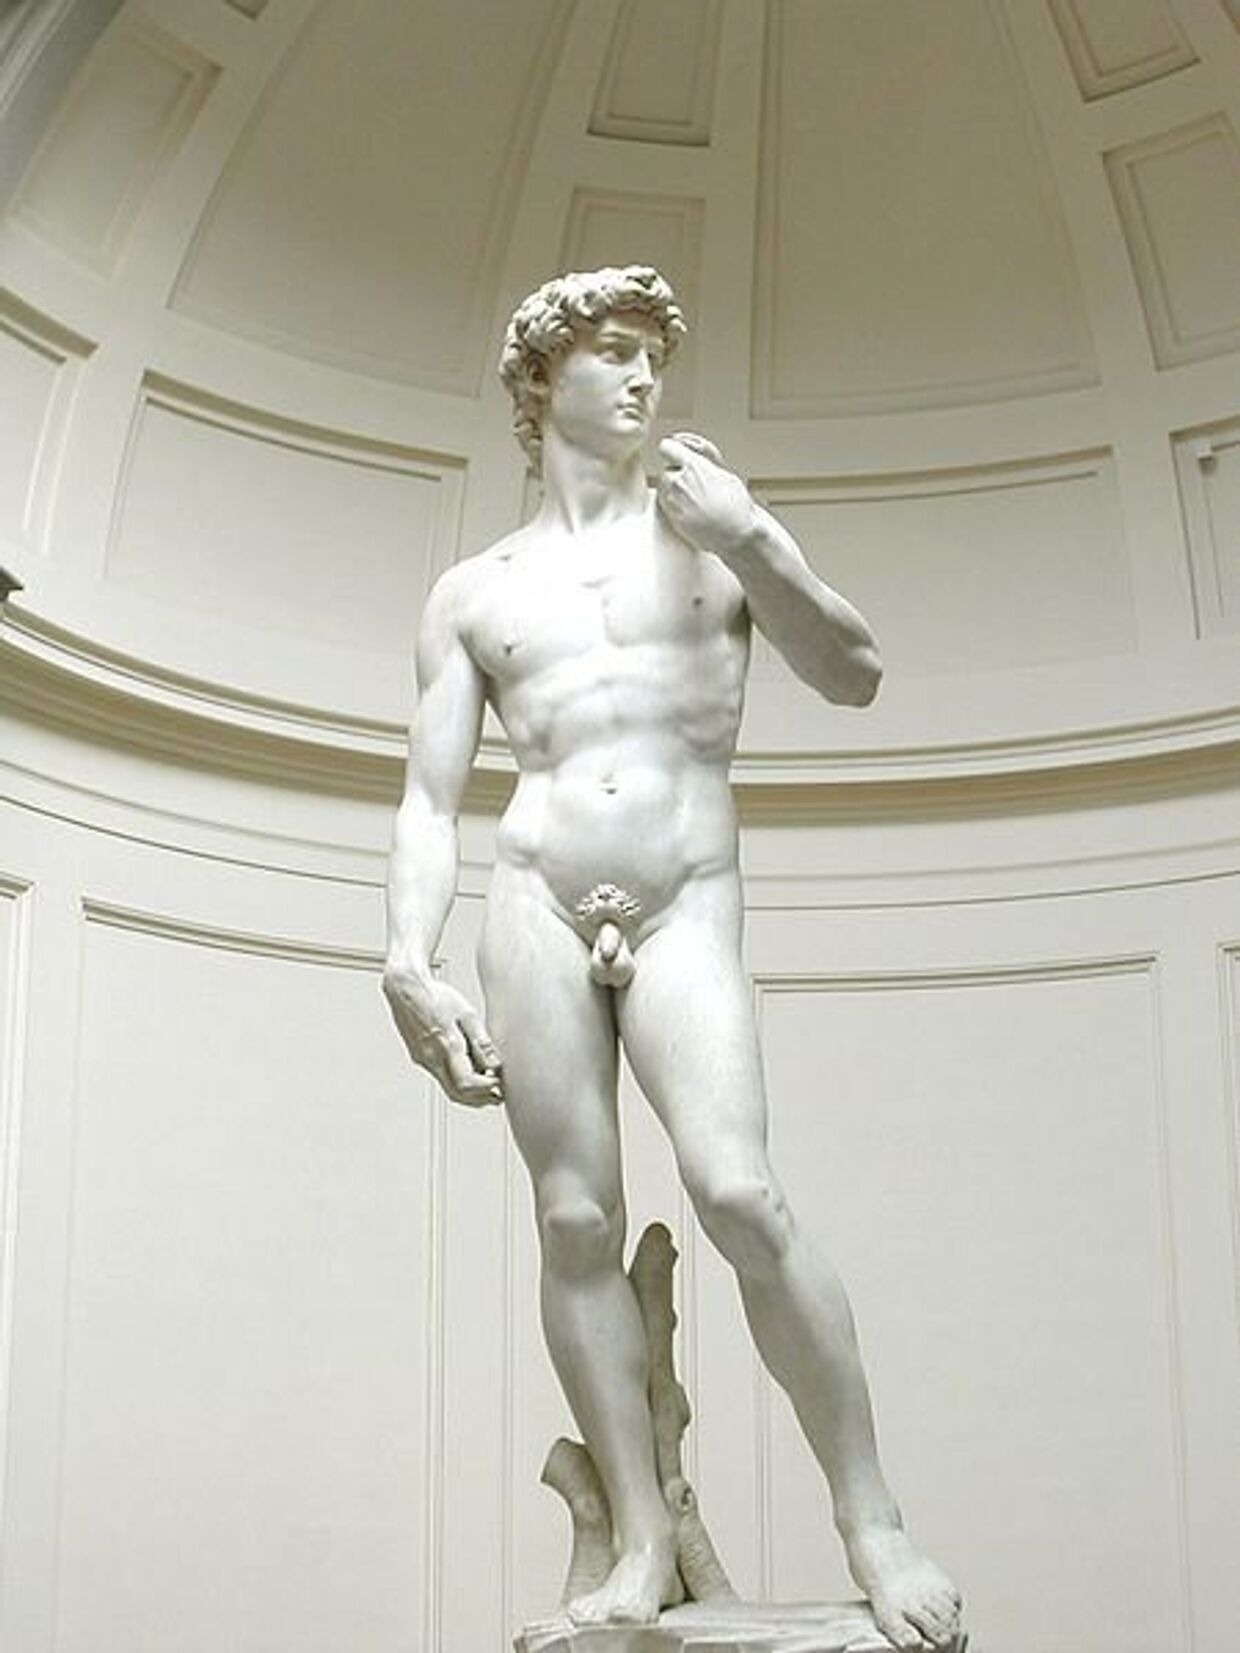 Давид — мраморная статуя работы Микеланджело